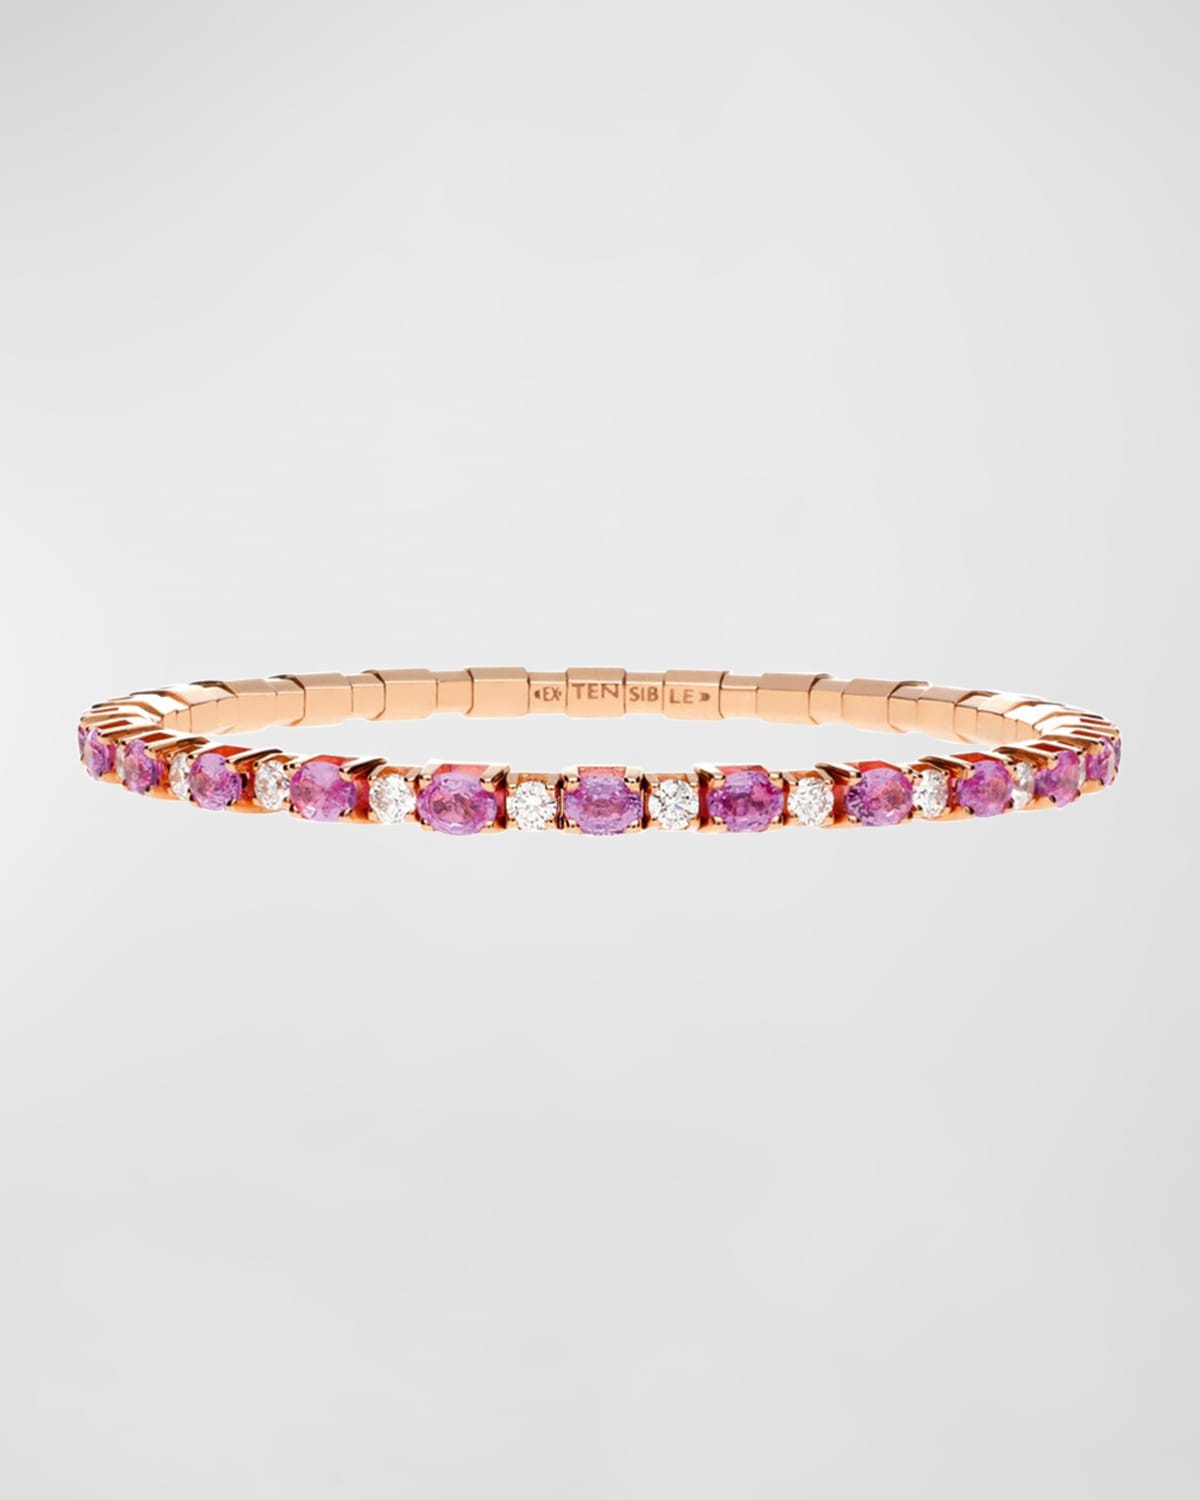 18K Rose Gold Oval Pink Sapphire and Diamond Stretch Tennis Bracelet, Size 6.5"L